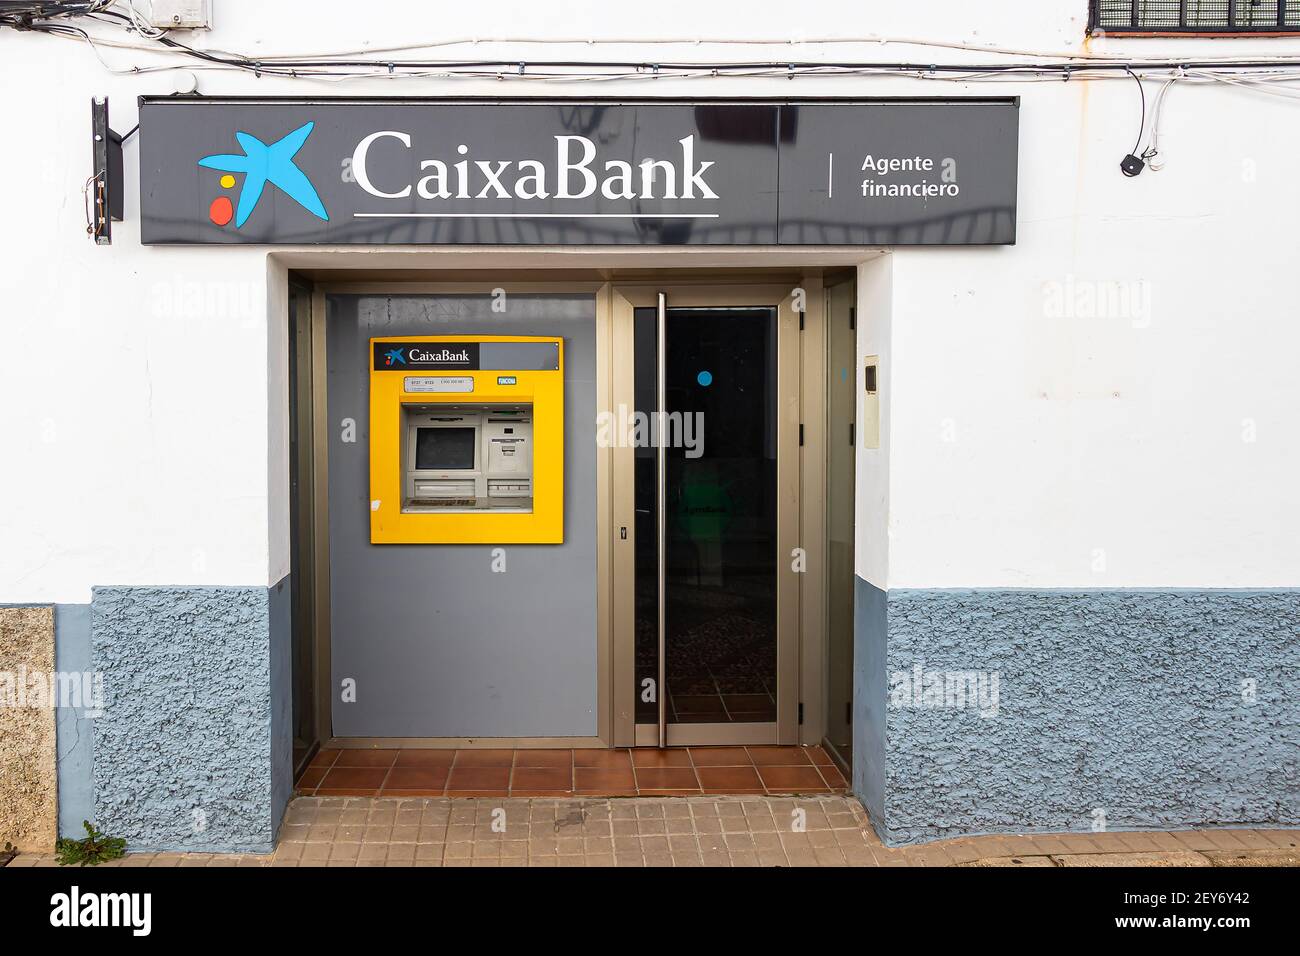 Huelva, Spain - March 1, 2021: ATM machine of Caixabank bank in Santa Ana La Real village, Huelva, Andalusia, Spain Stock Photo